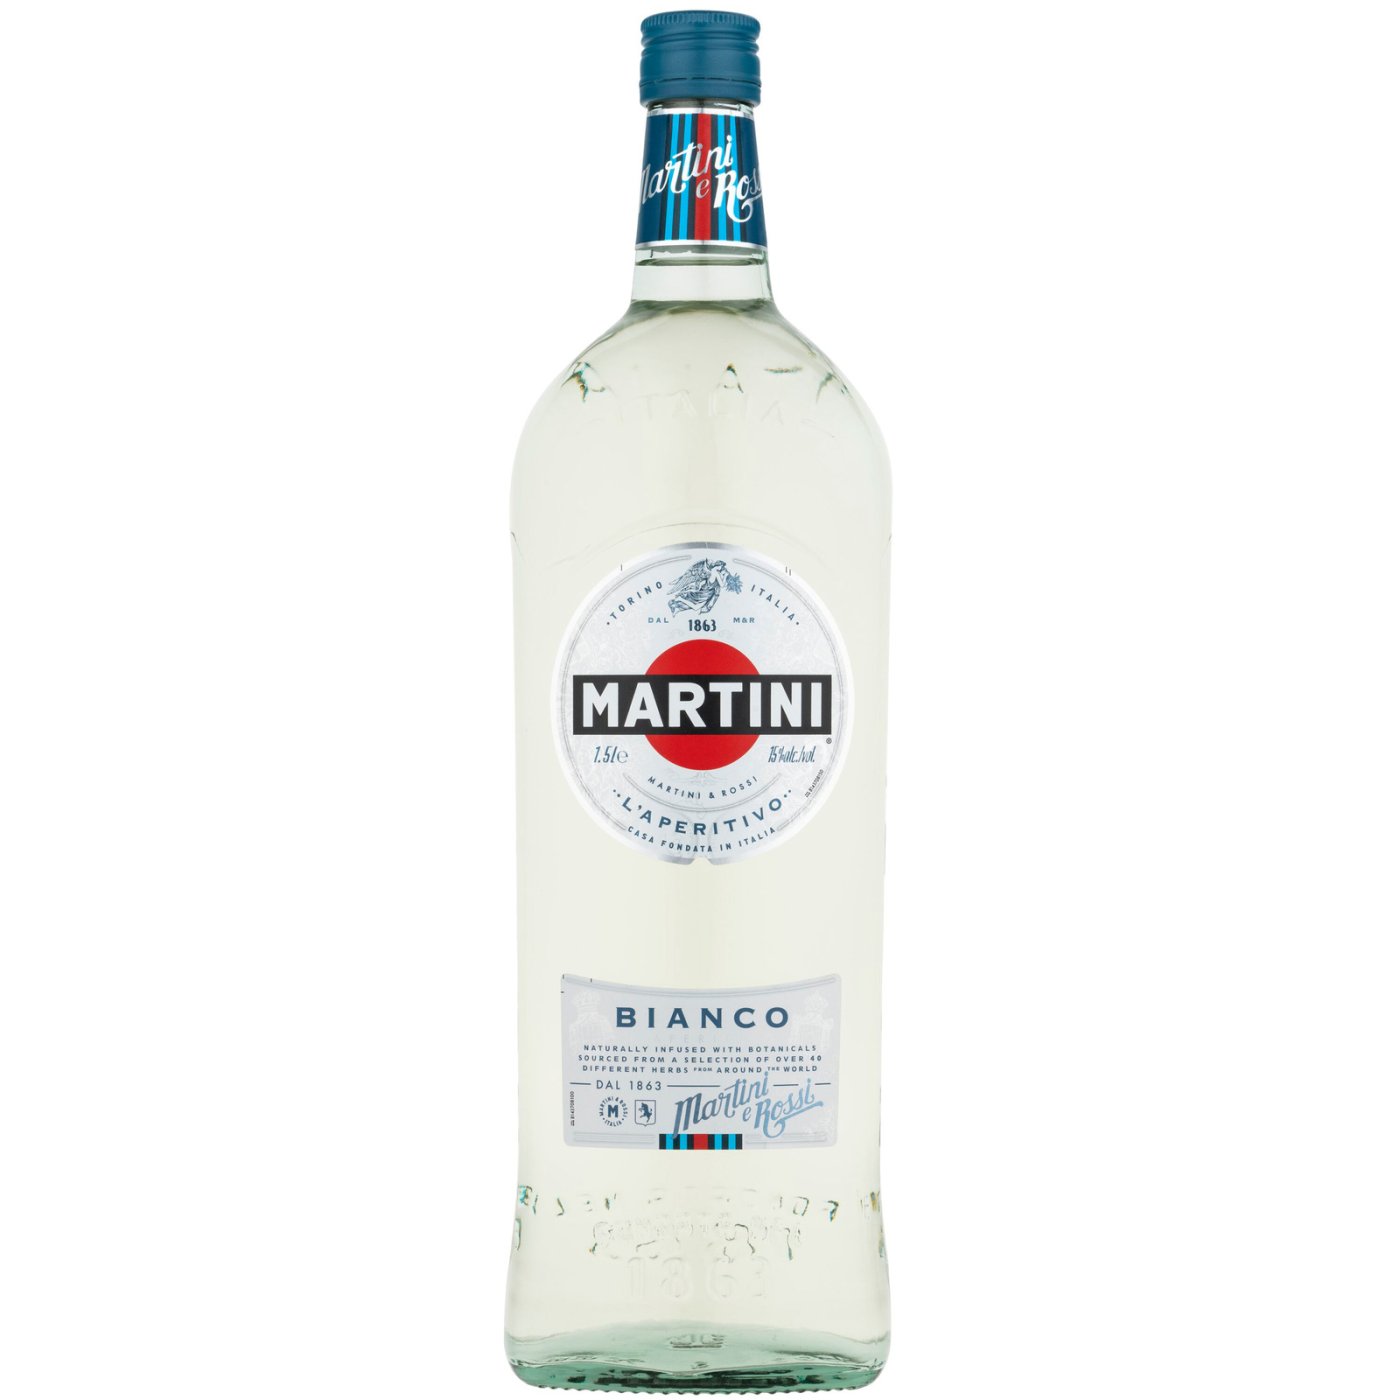 Martini - Bianco 1,50 liter